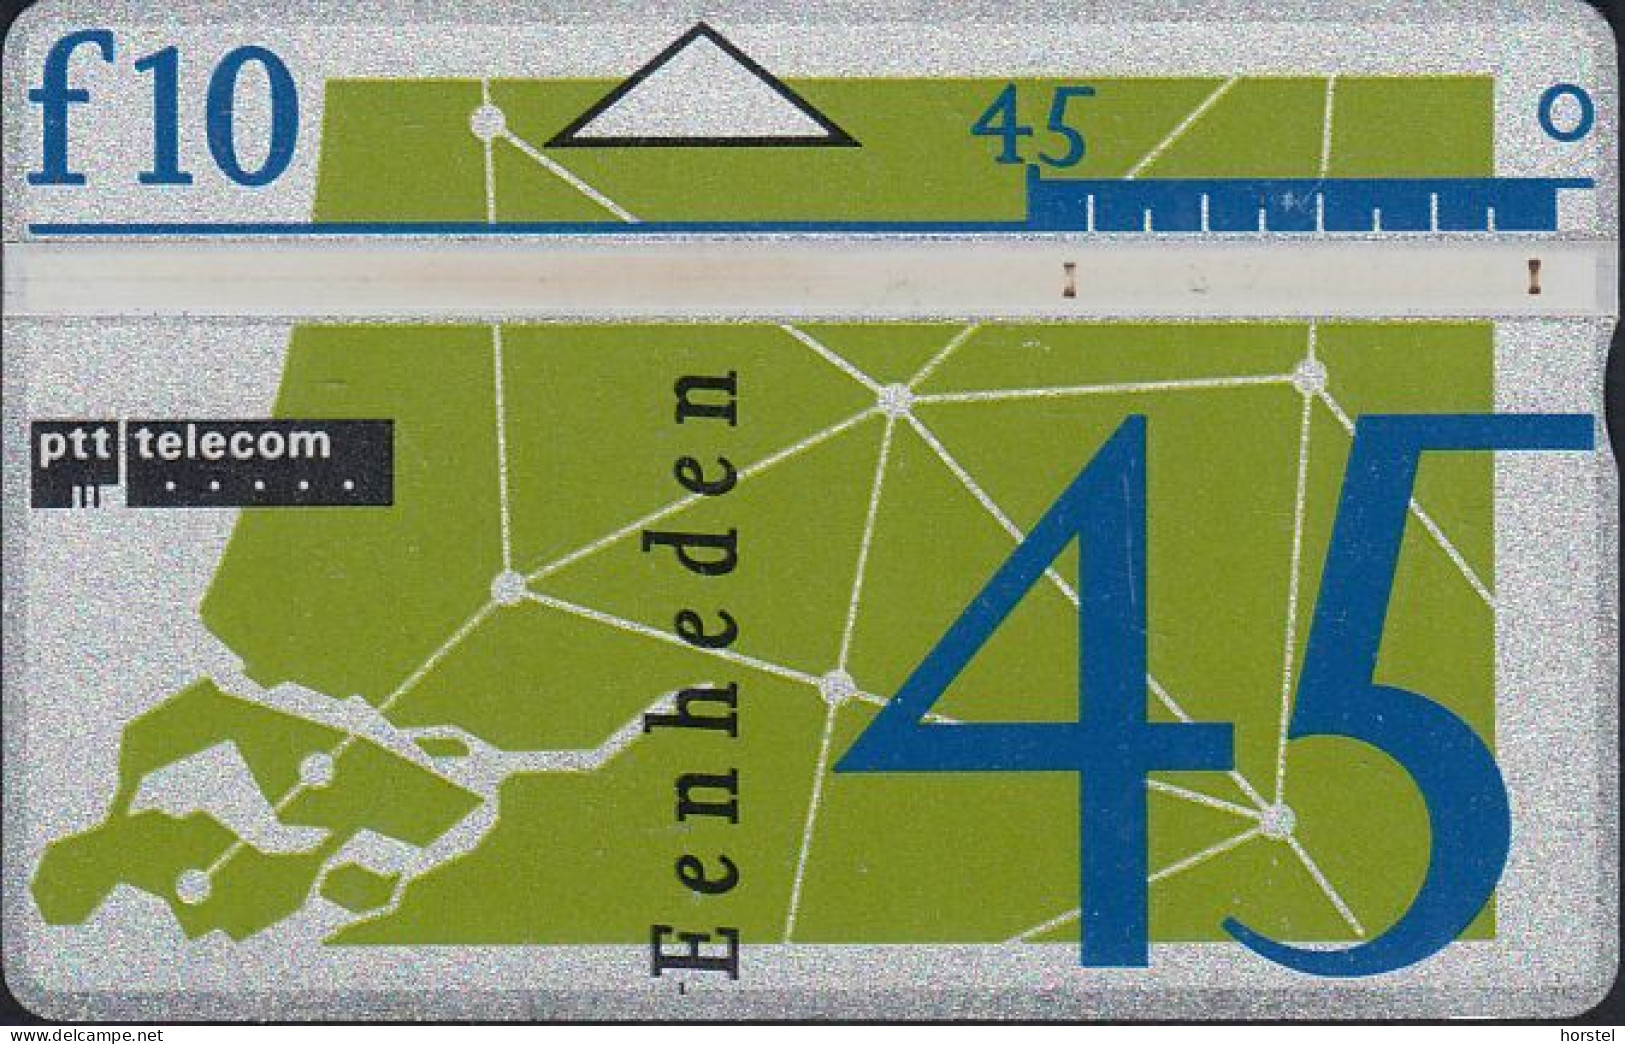 Netherland - L&G 1991 7.Standard Serie - D019B - (110B) Network - Public